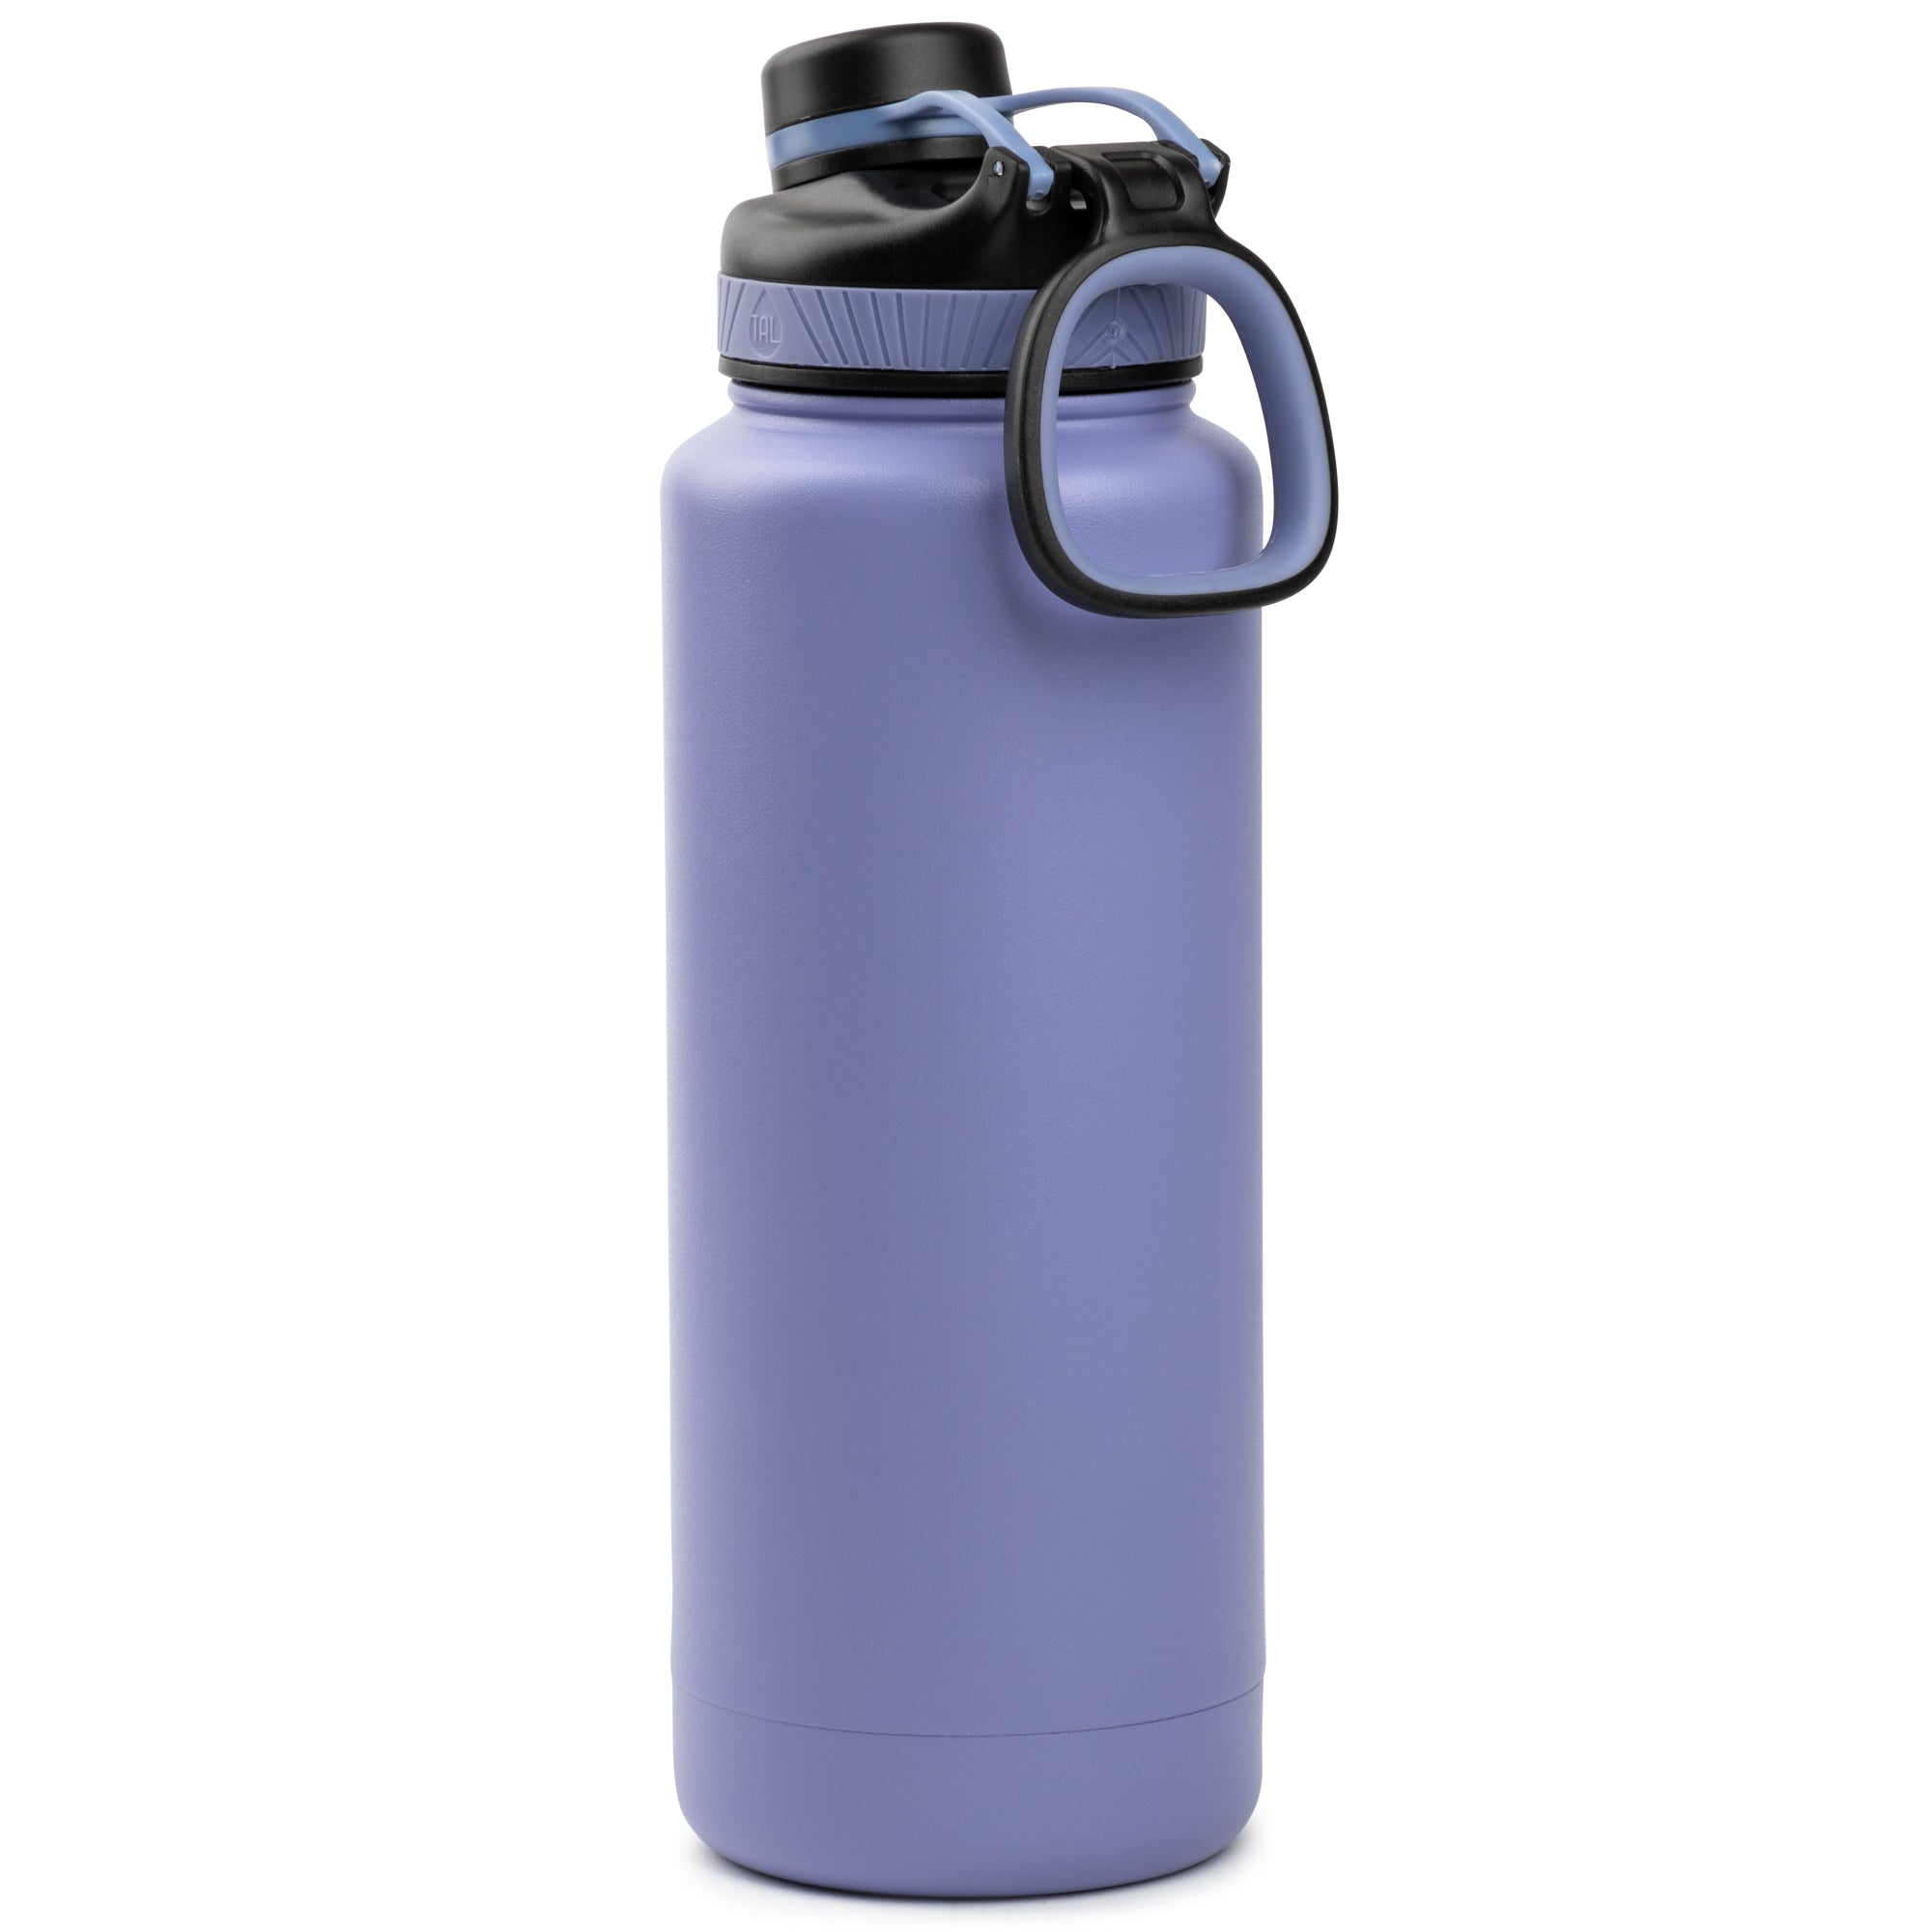 TAL Stainless Steel Ranger Water Bottle 40 fl oz, Gray